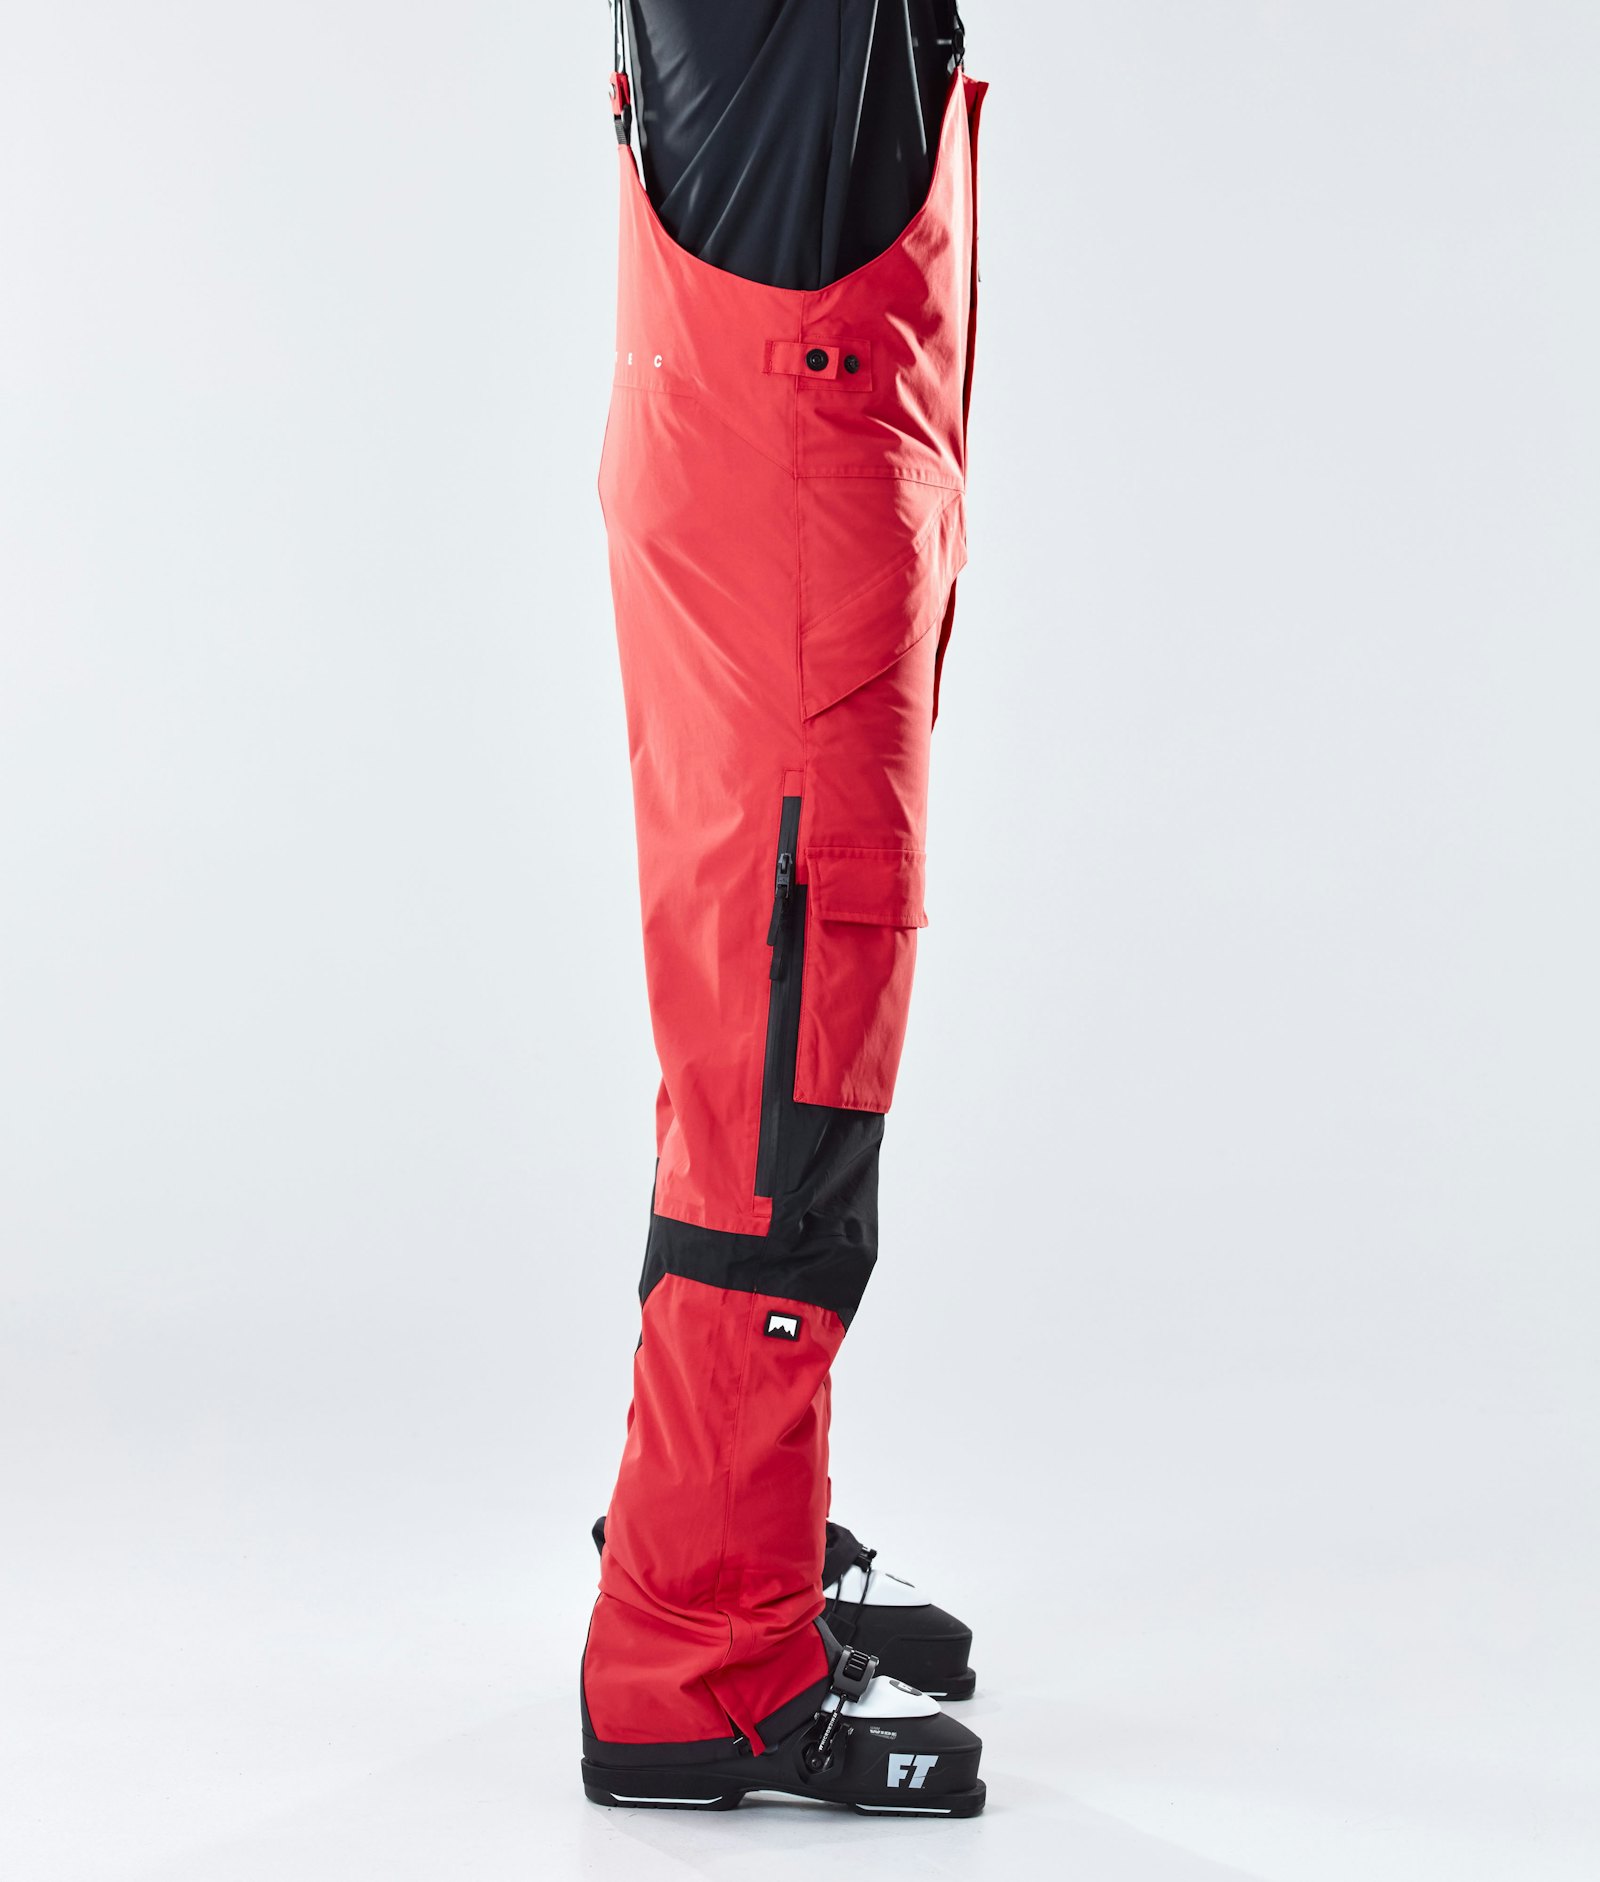 Montec Fawk 2020 Ski Pants Men Red/Black